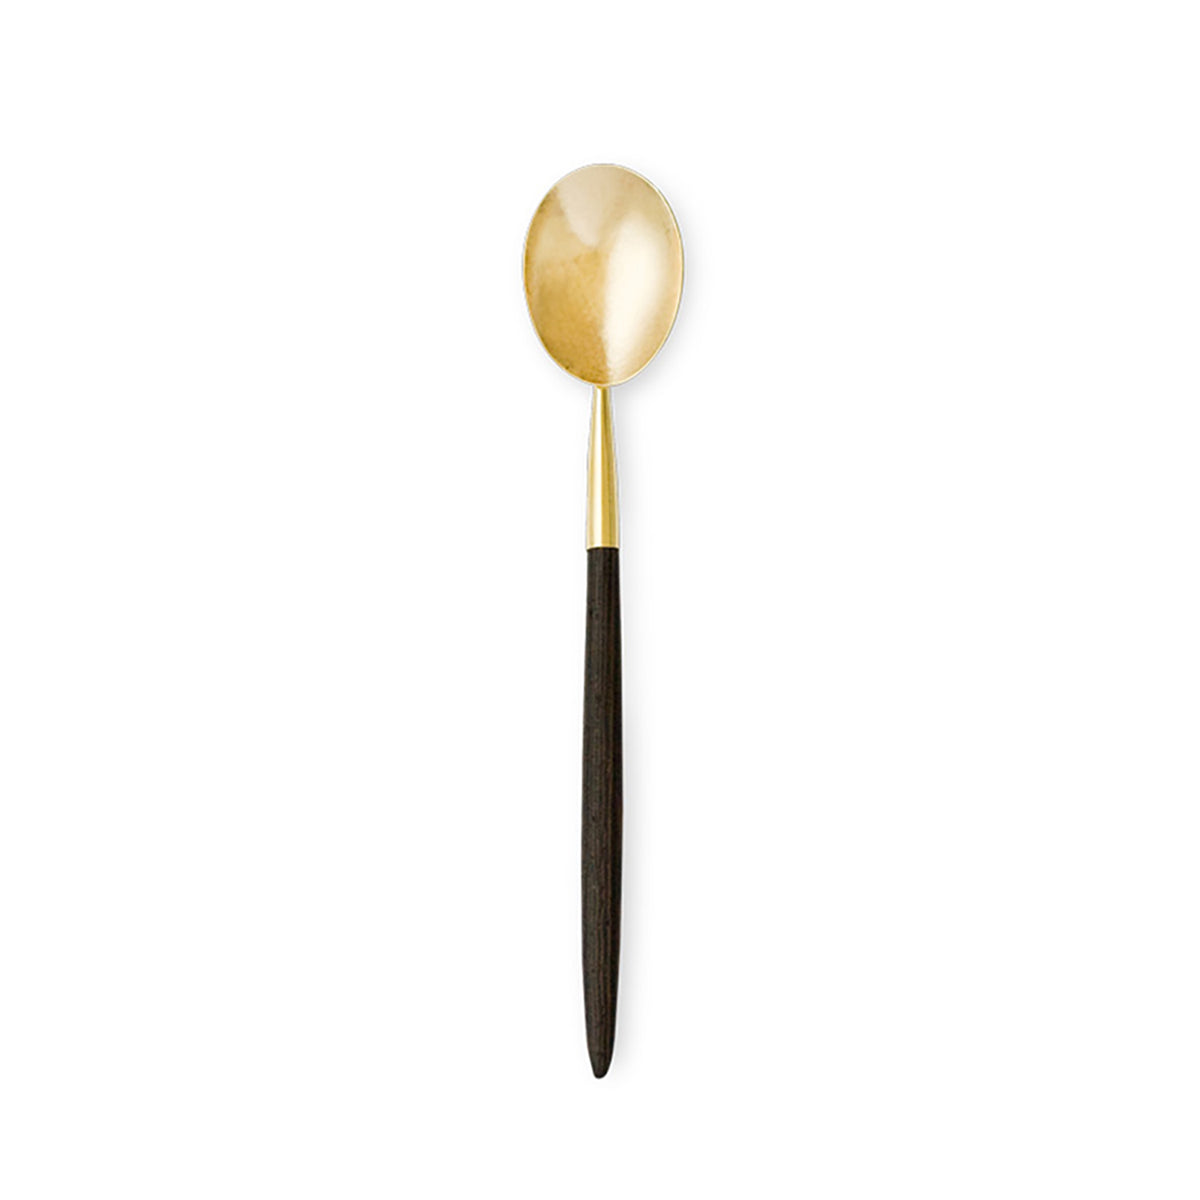 LUE Brass/Wooden Handle Spoon